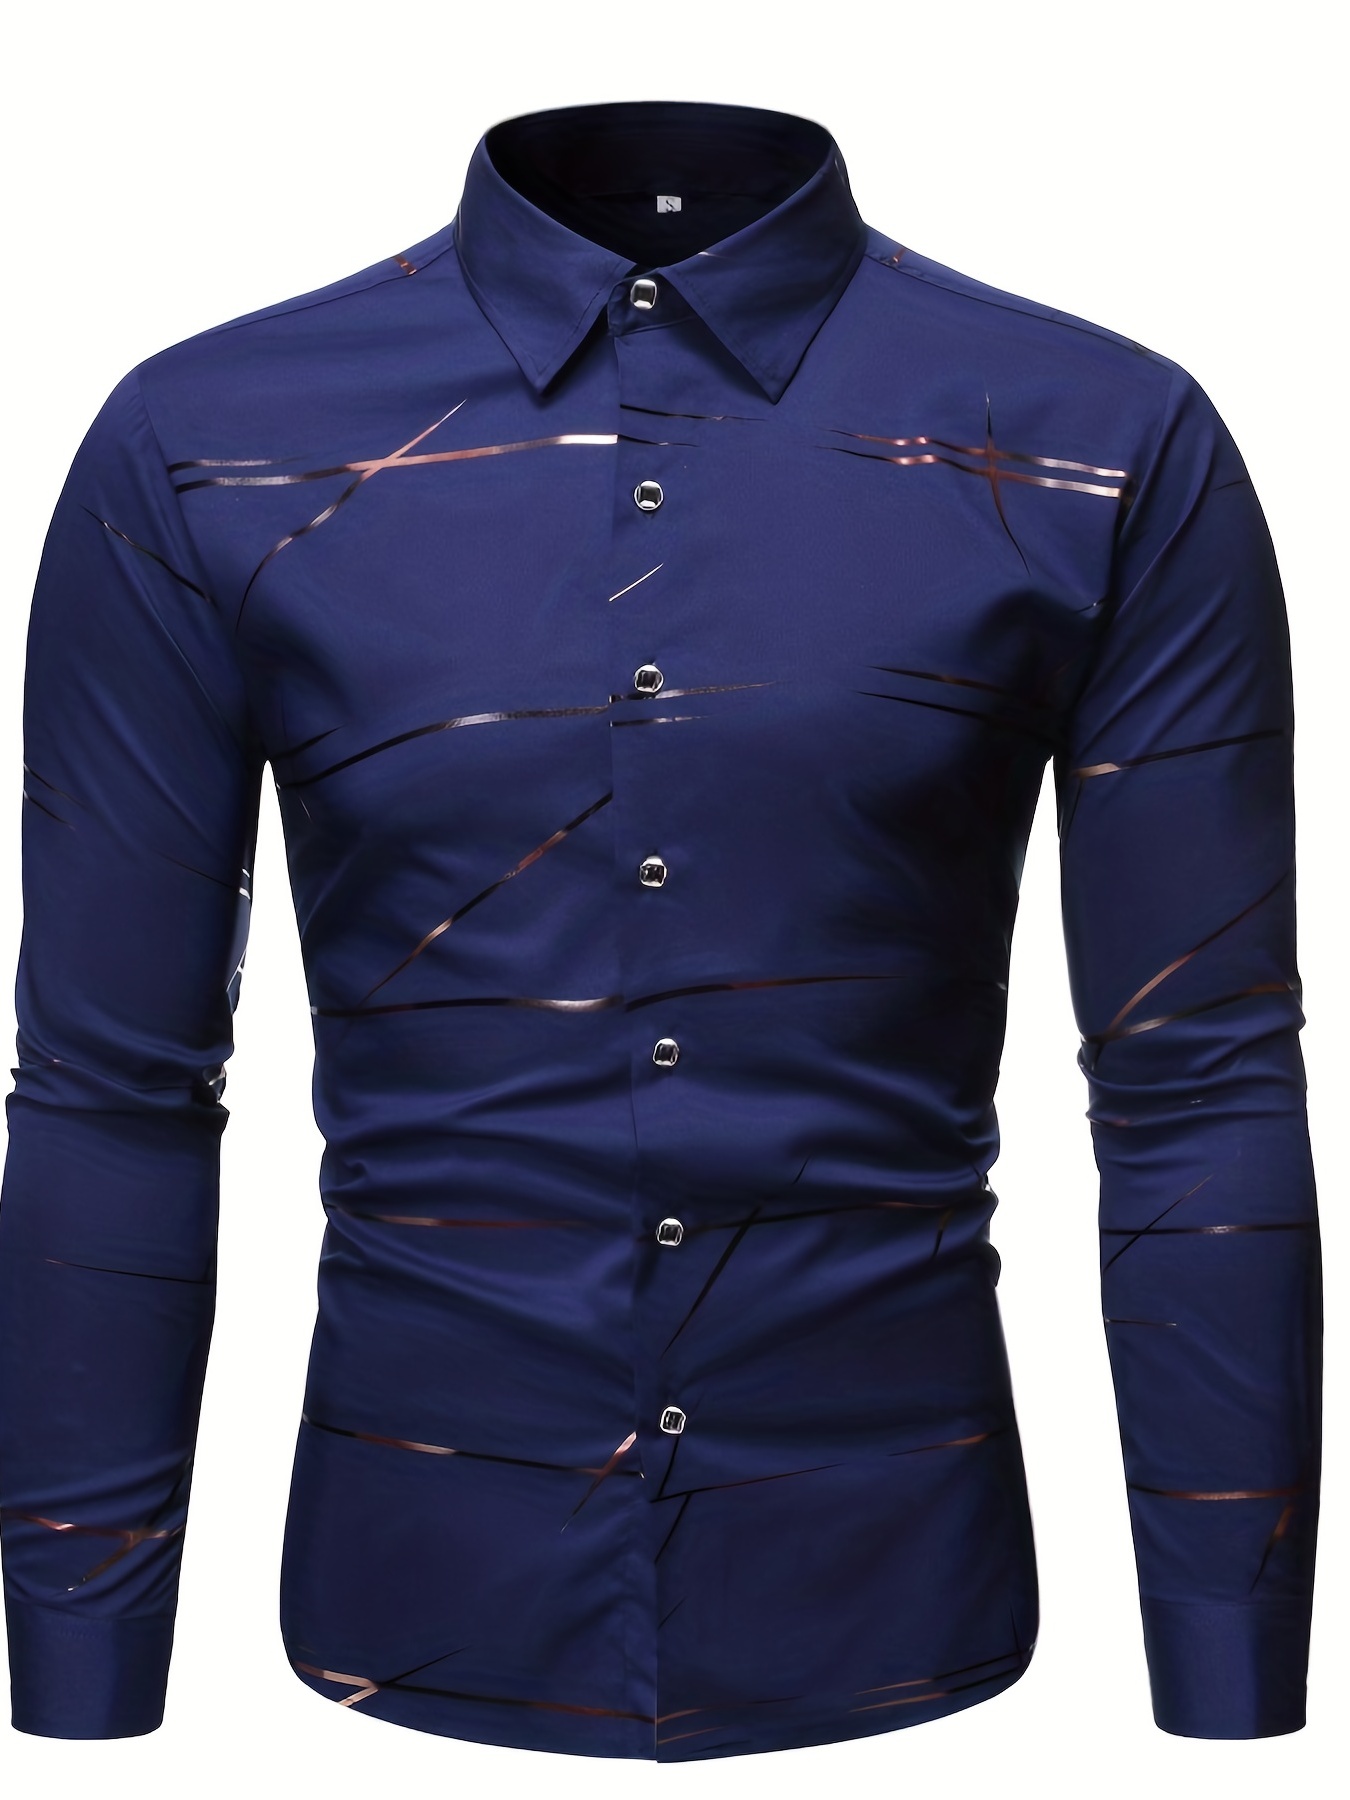 mens casual navy blue slim shirt details 7